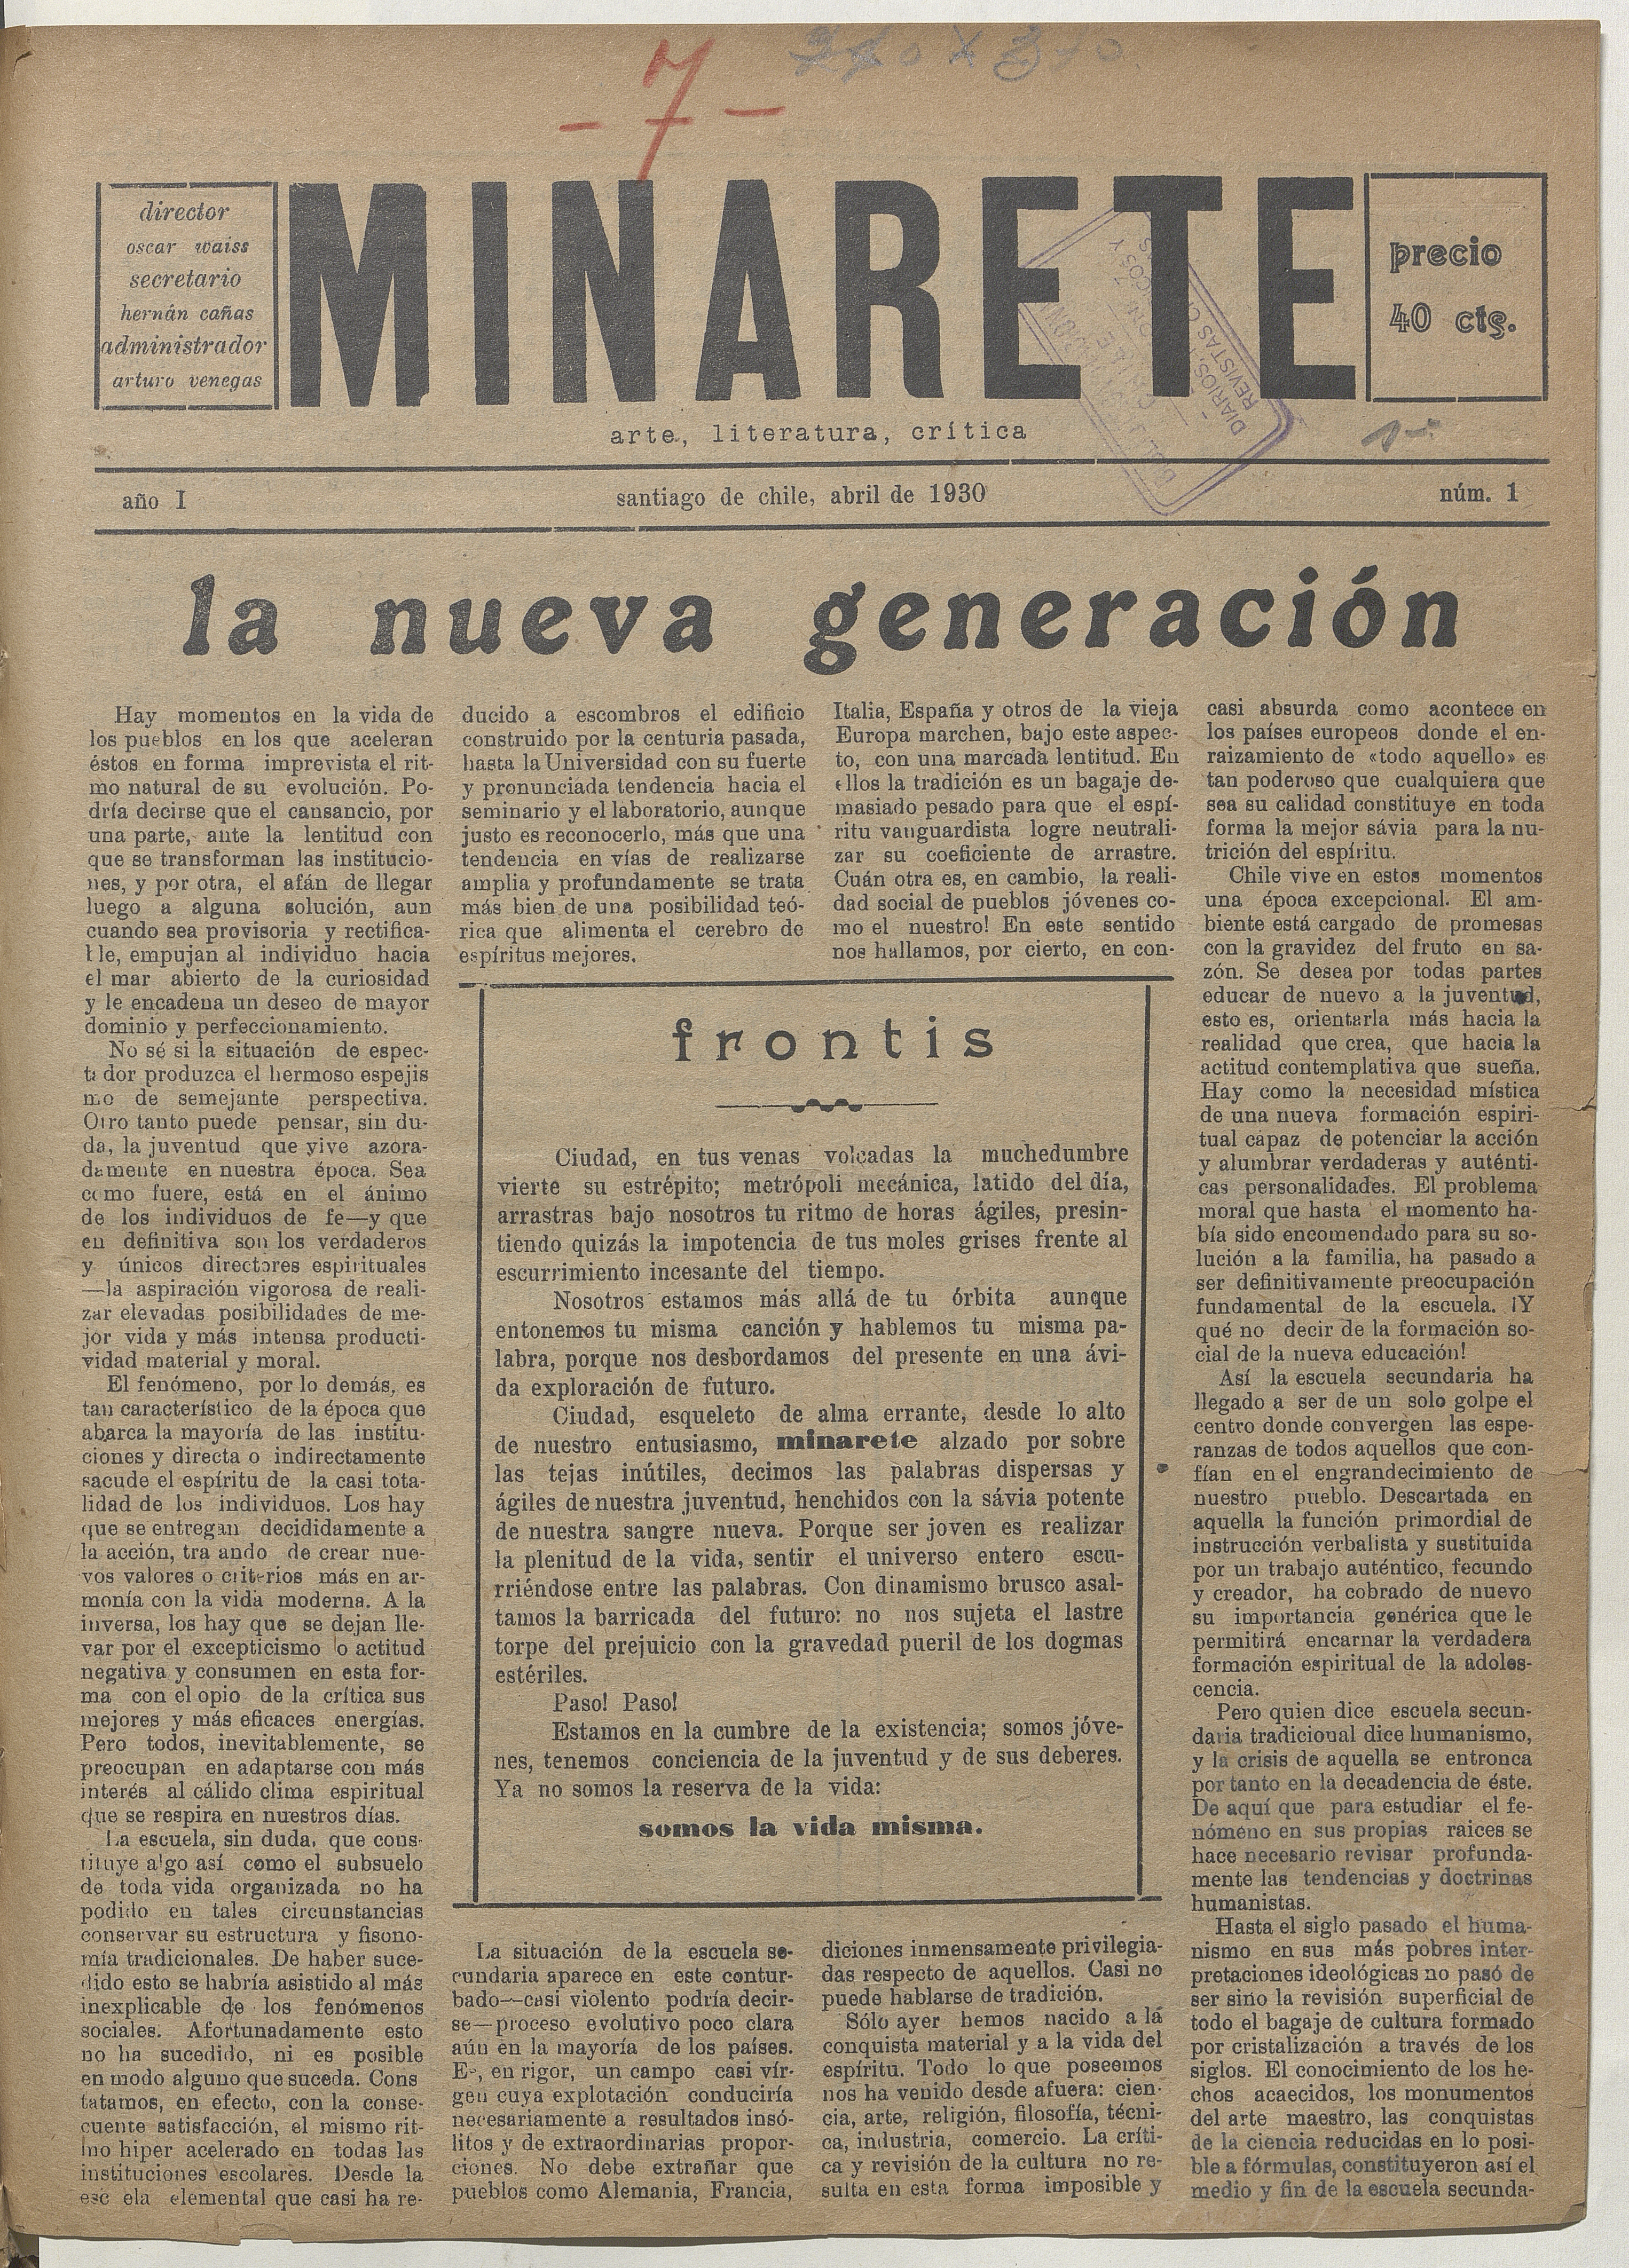 Minarete. Año 1, número 1, abril de 1930